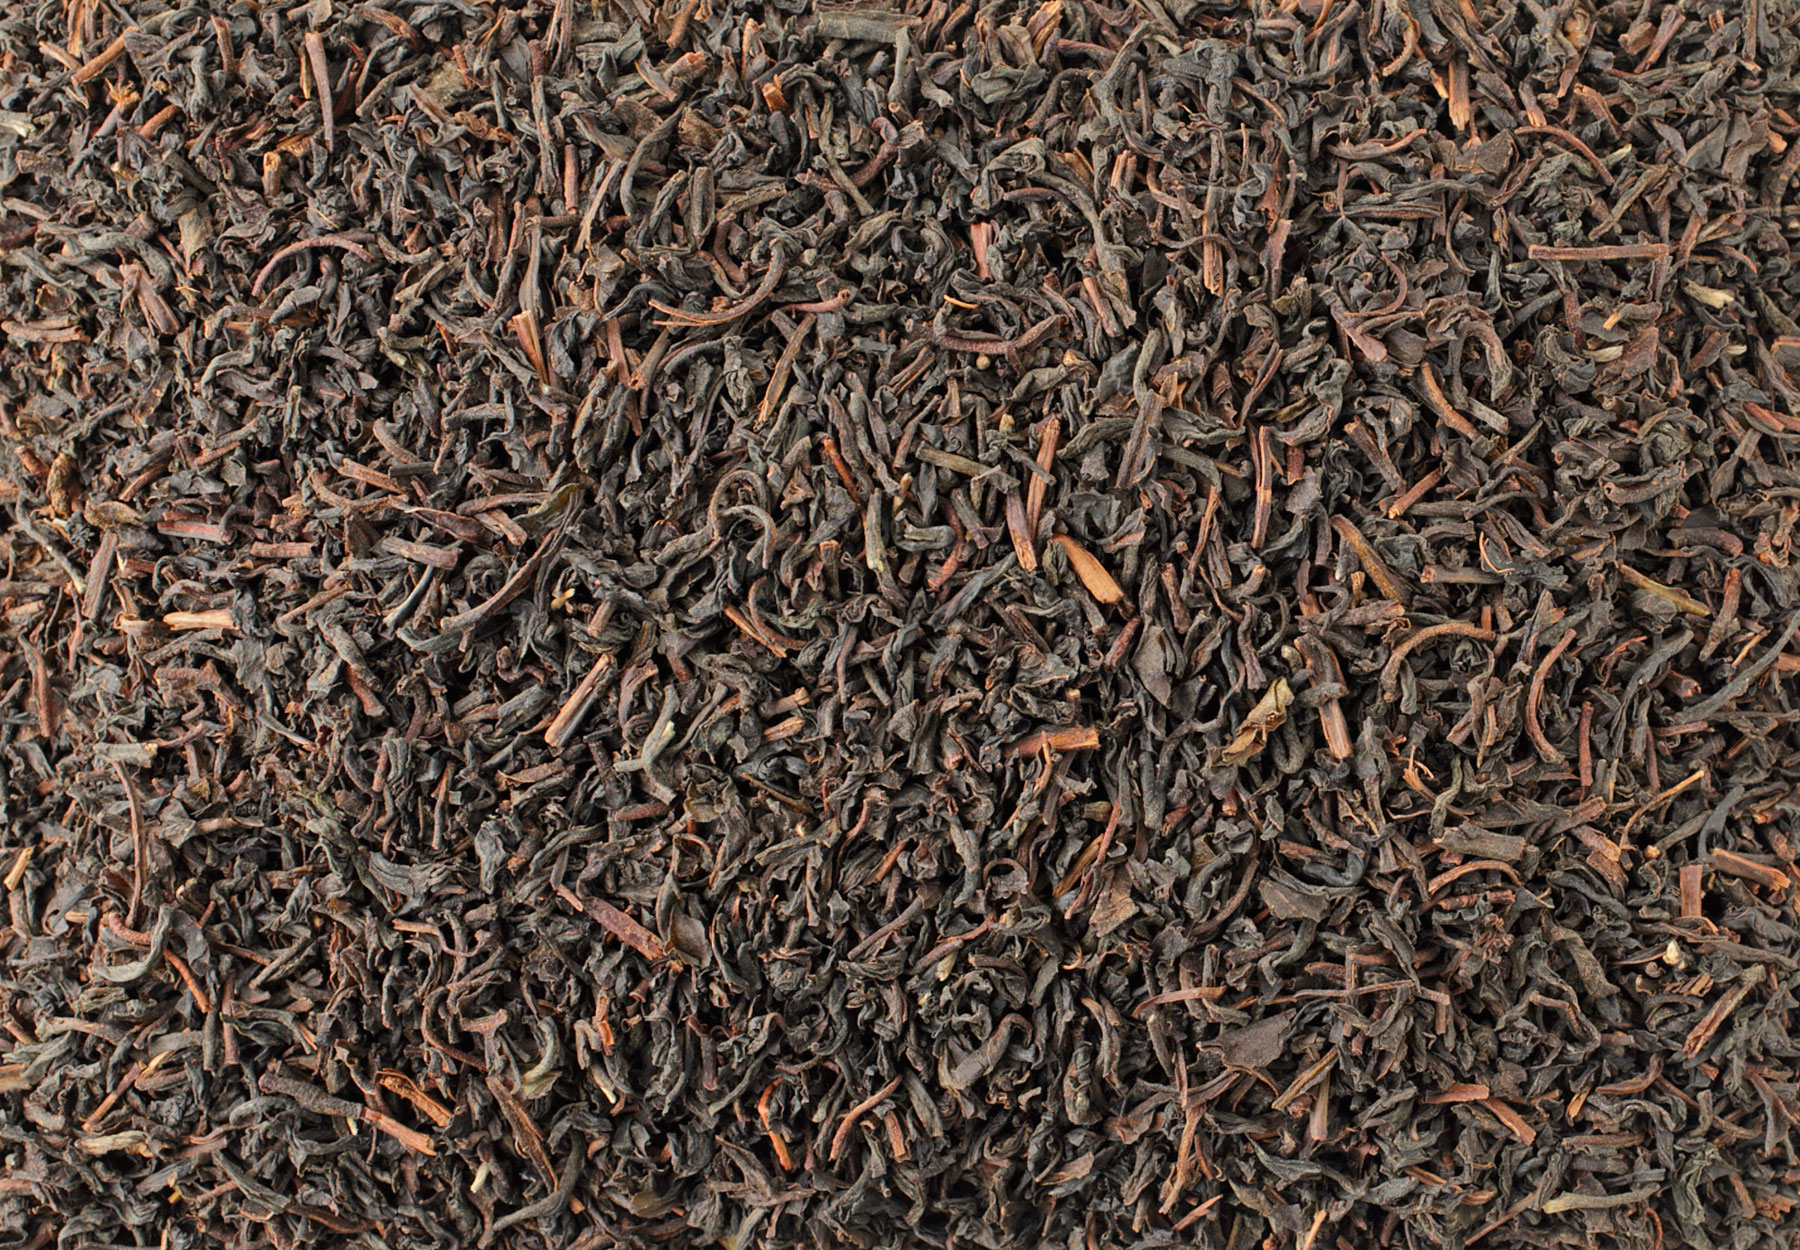 Cheericup Ceylon Tea from the Mark T. Wendell Tea Company